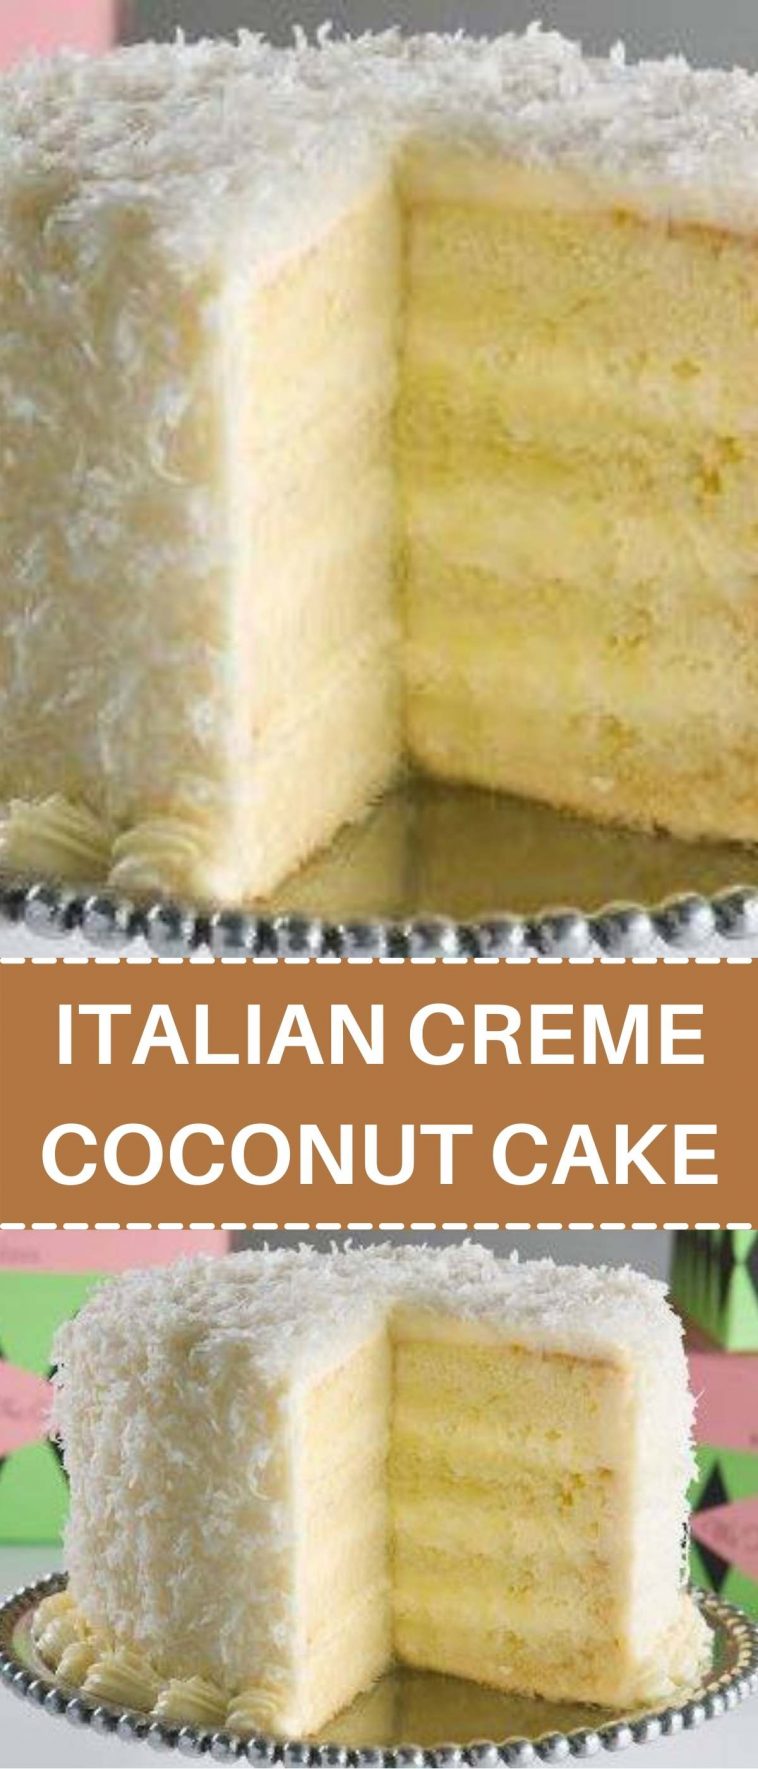 ITALIAN CREME COCONUT CAKE